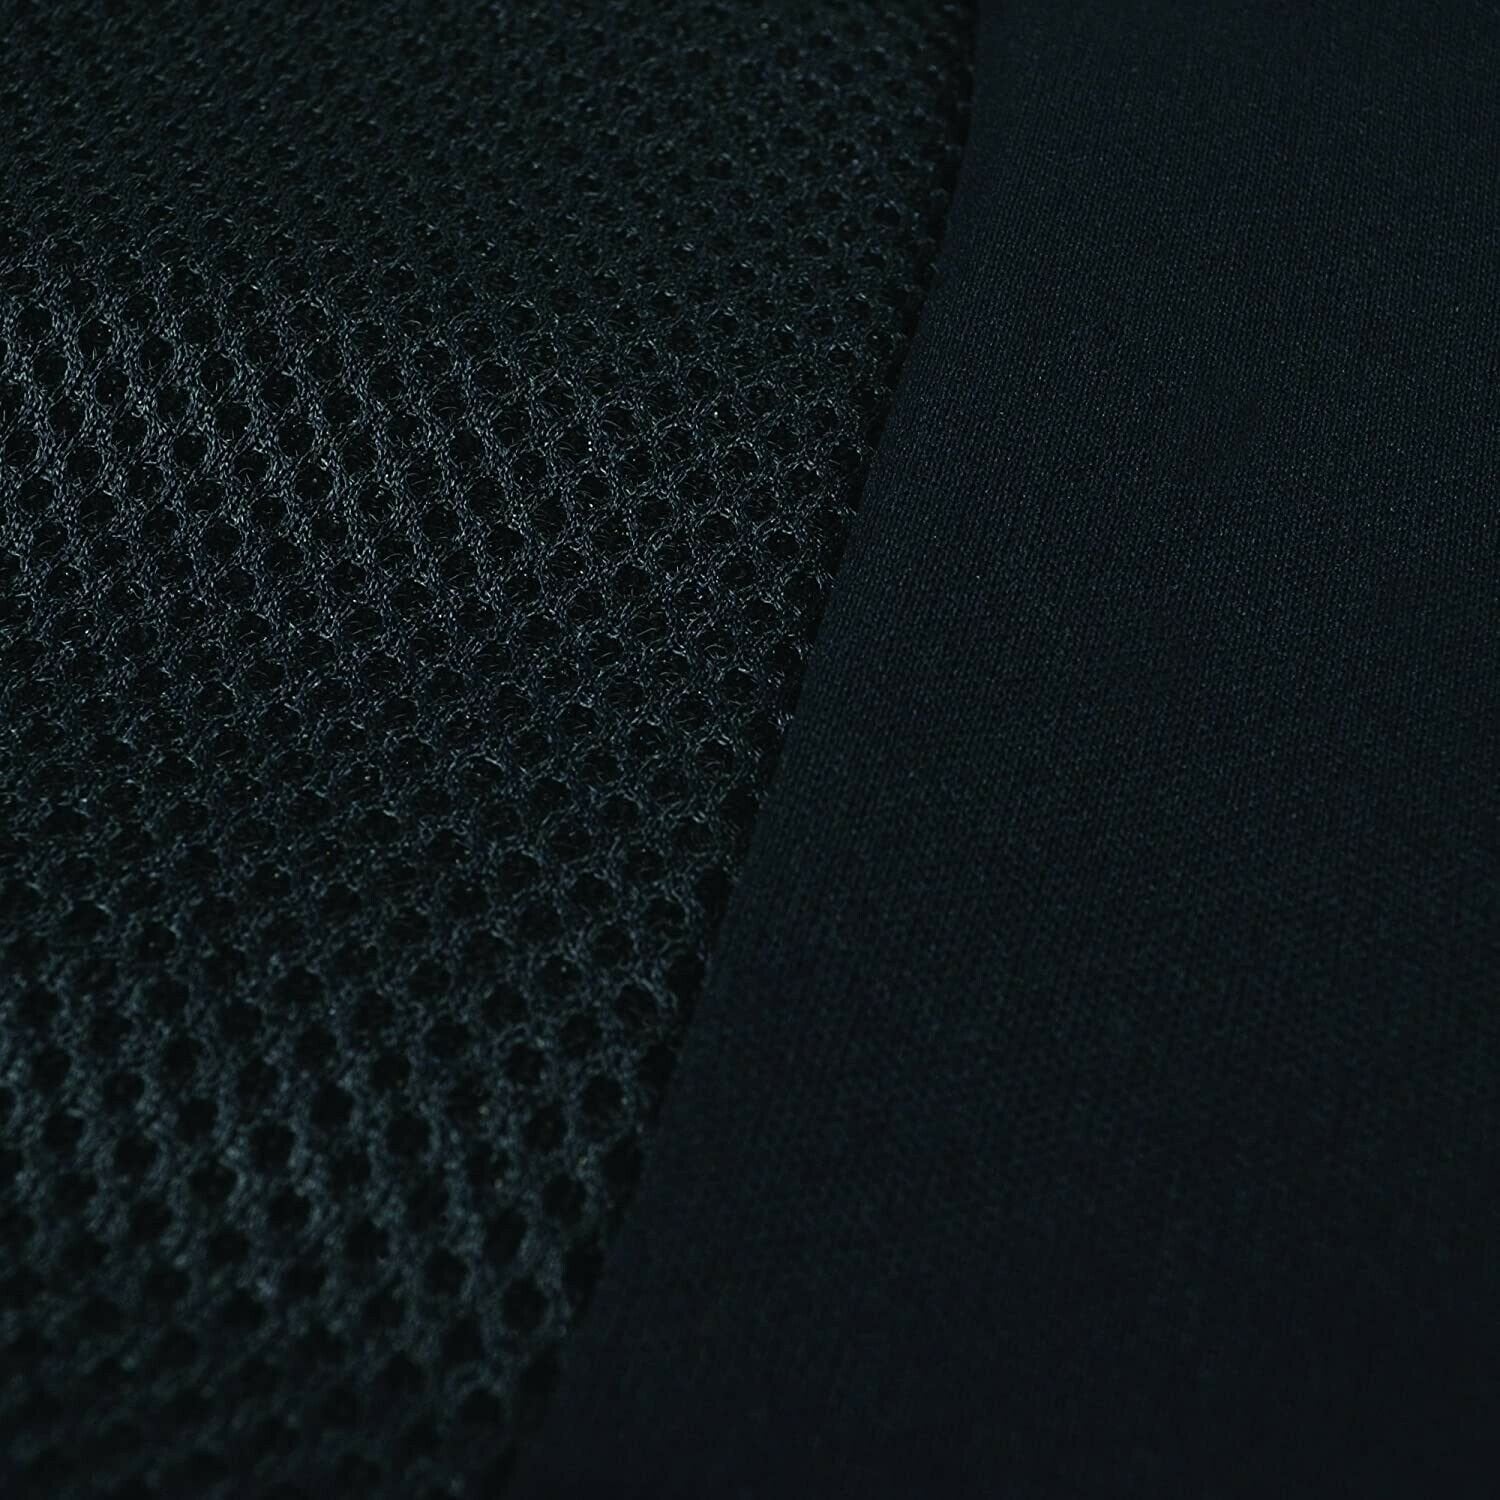 Miami Heat Steering Wheel Cover Premium Embroidered Black 15 Inch